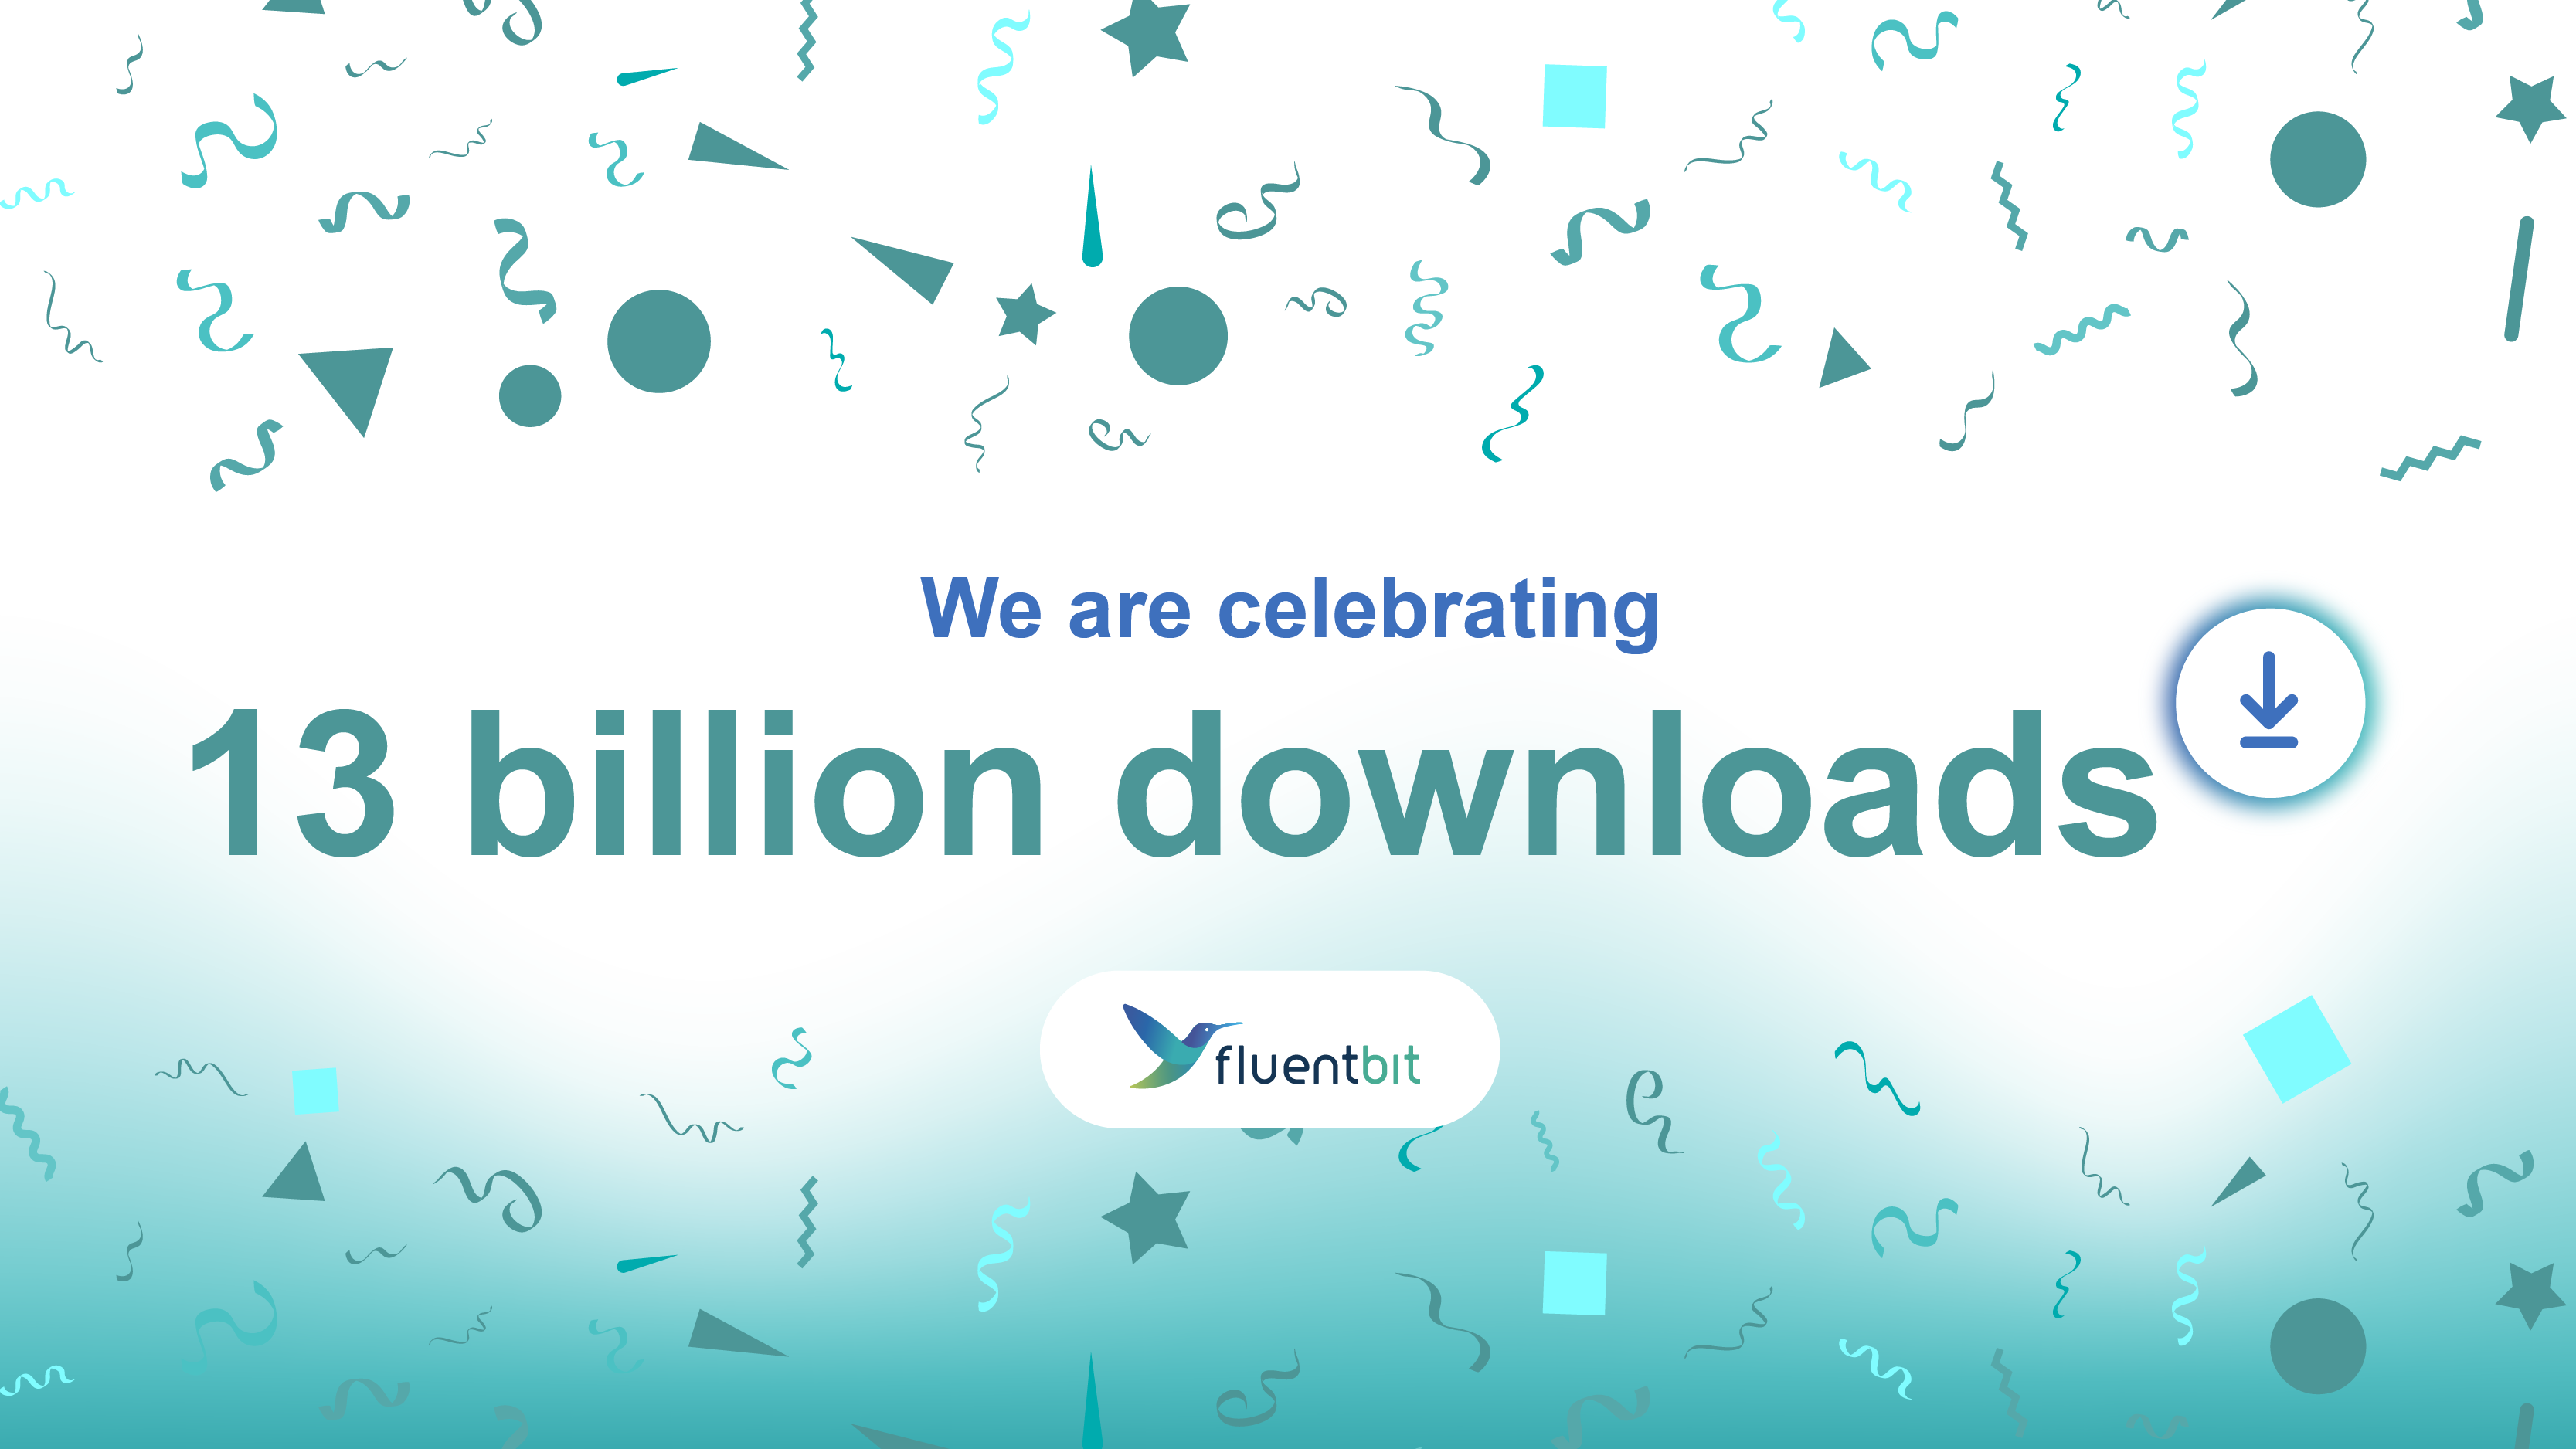 We are celebrating 13 billion downloads